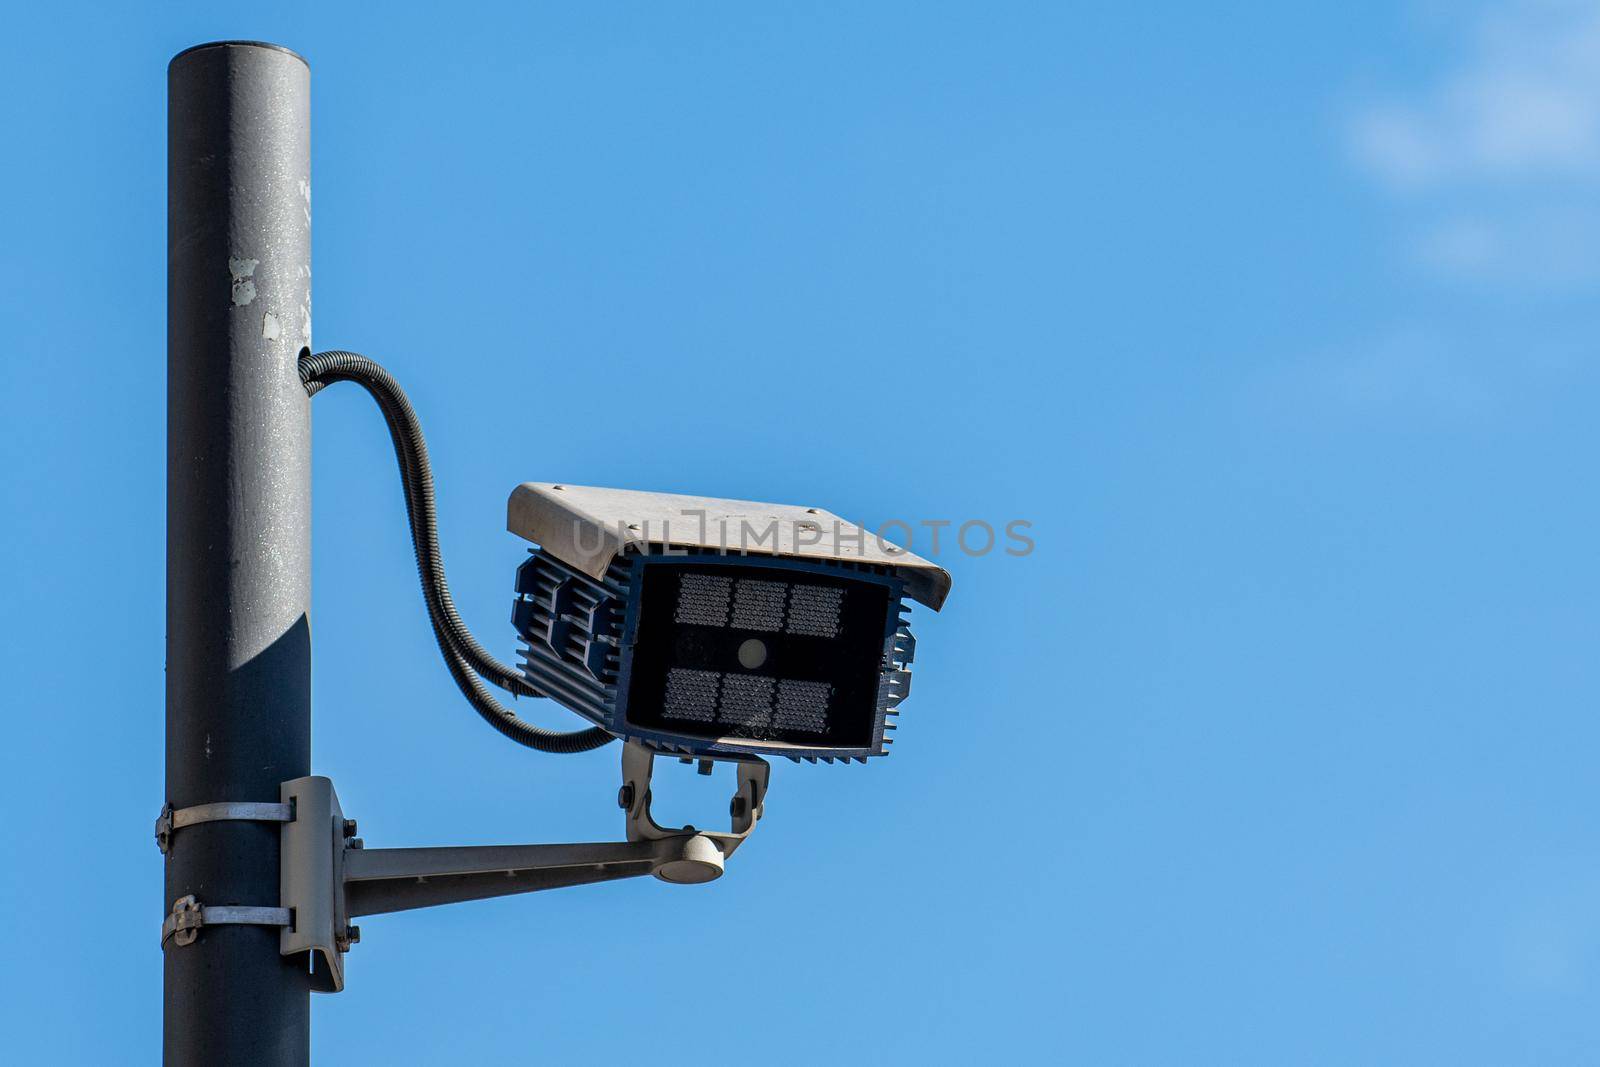 surveillance cameras inside the city by carfedeph